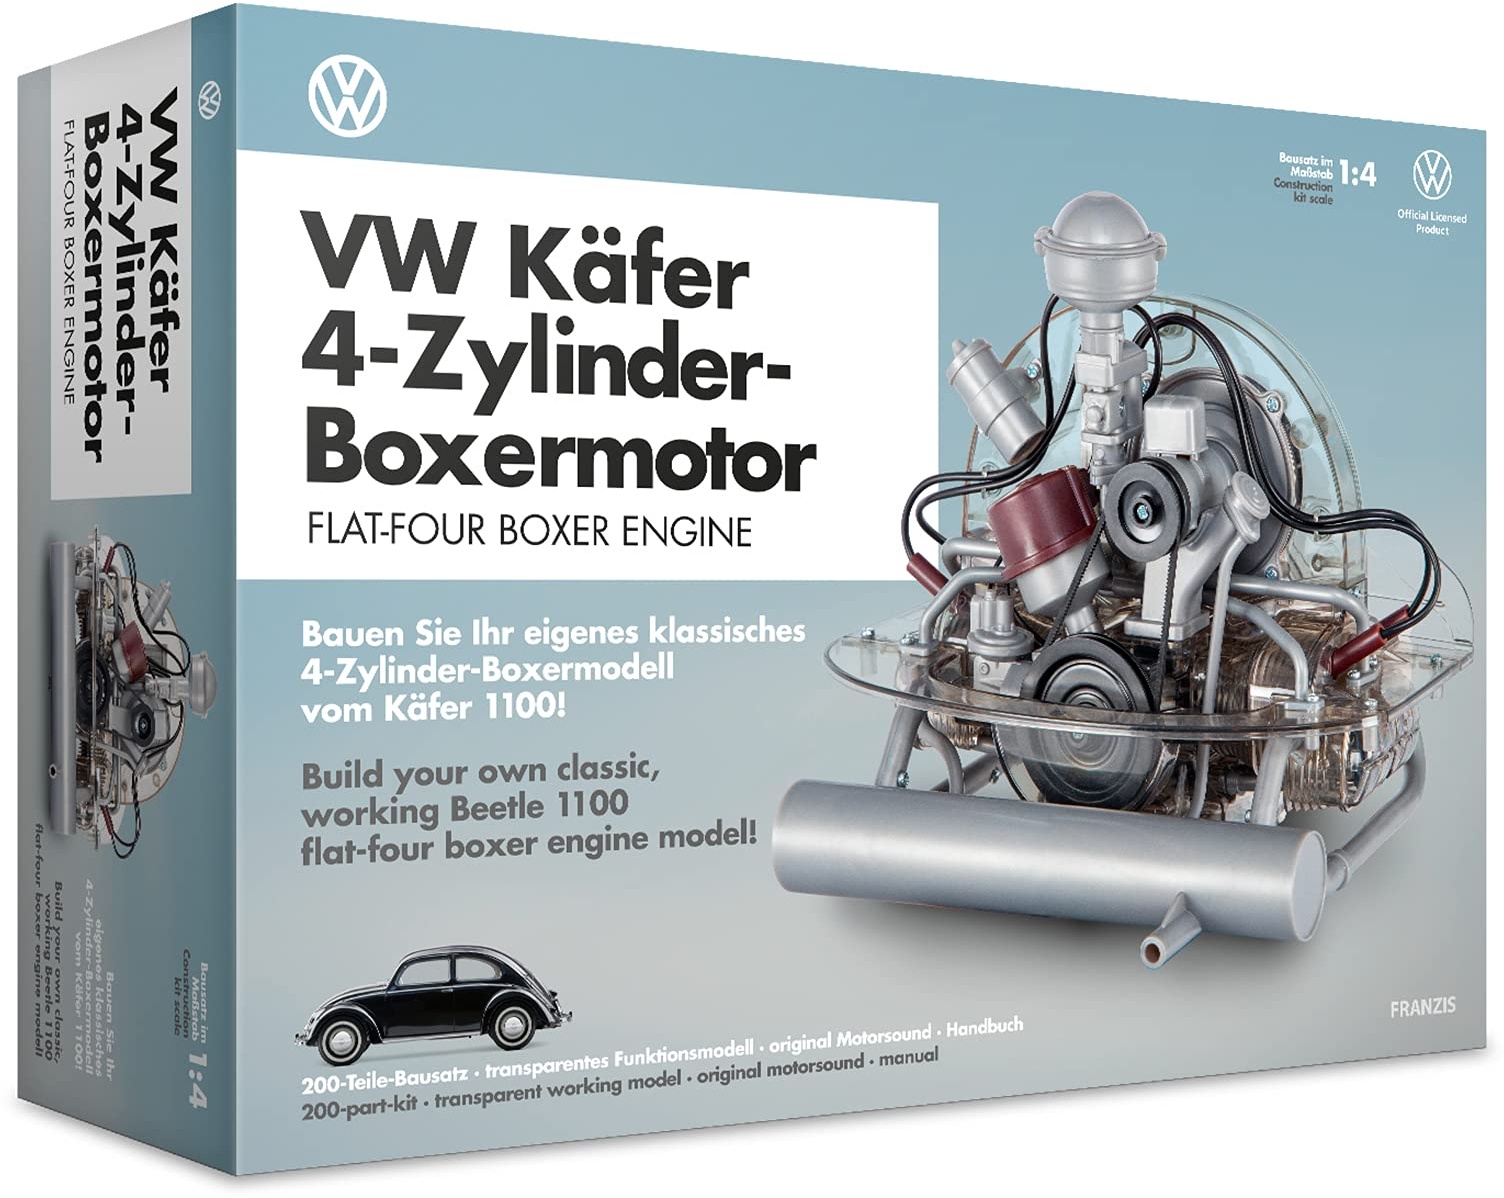 FRANZIS 67038 – Volkswagen VW Käfer Boxermotor, originalgetreuer Motorbausatz des 4-Zylinder Käfer 1100 Motors im Maßstab 1:4, inkl. Soundmodul, Anleitung und 100-seitigem Begleitbuch